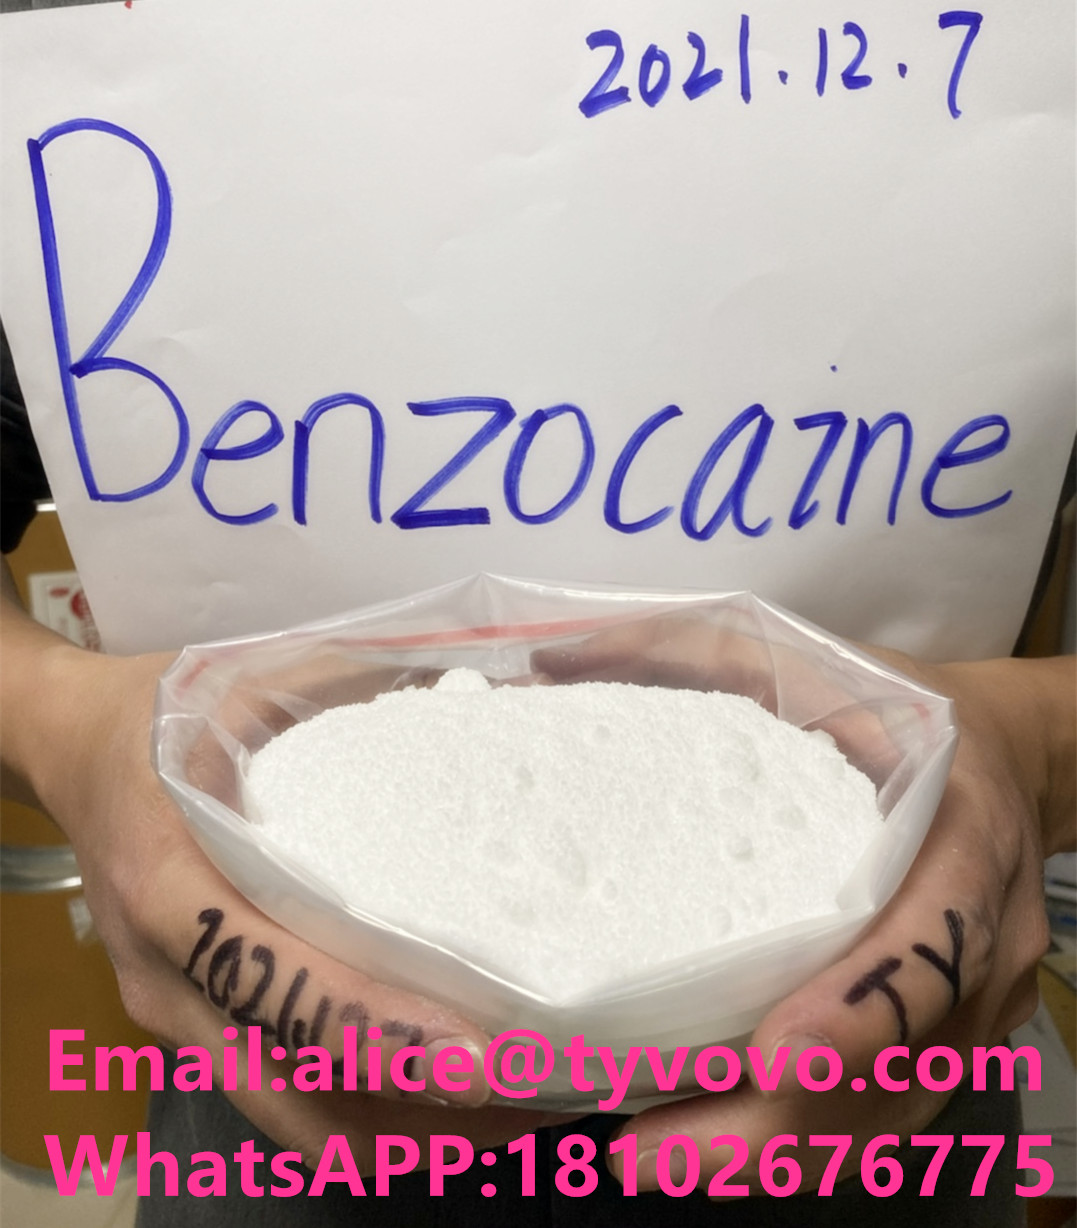 99% pure Benzocaine/Benzocaina hloride powder with USP/BP standard  